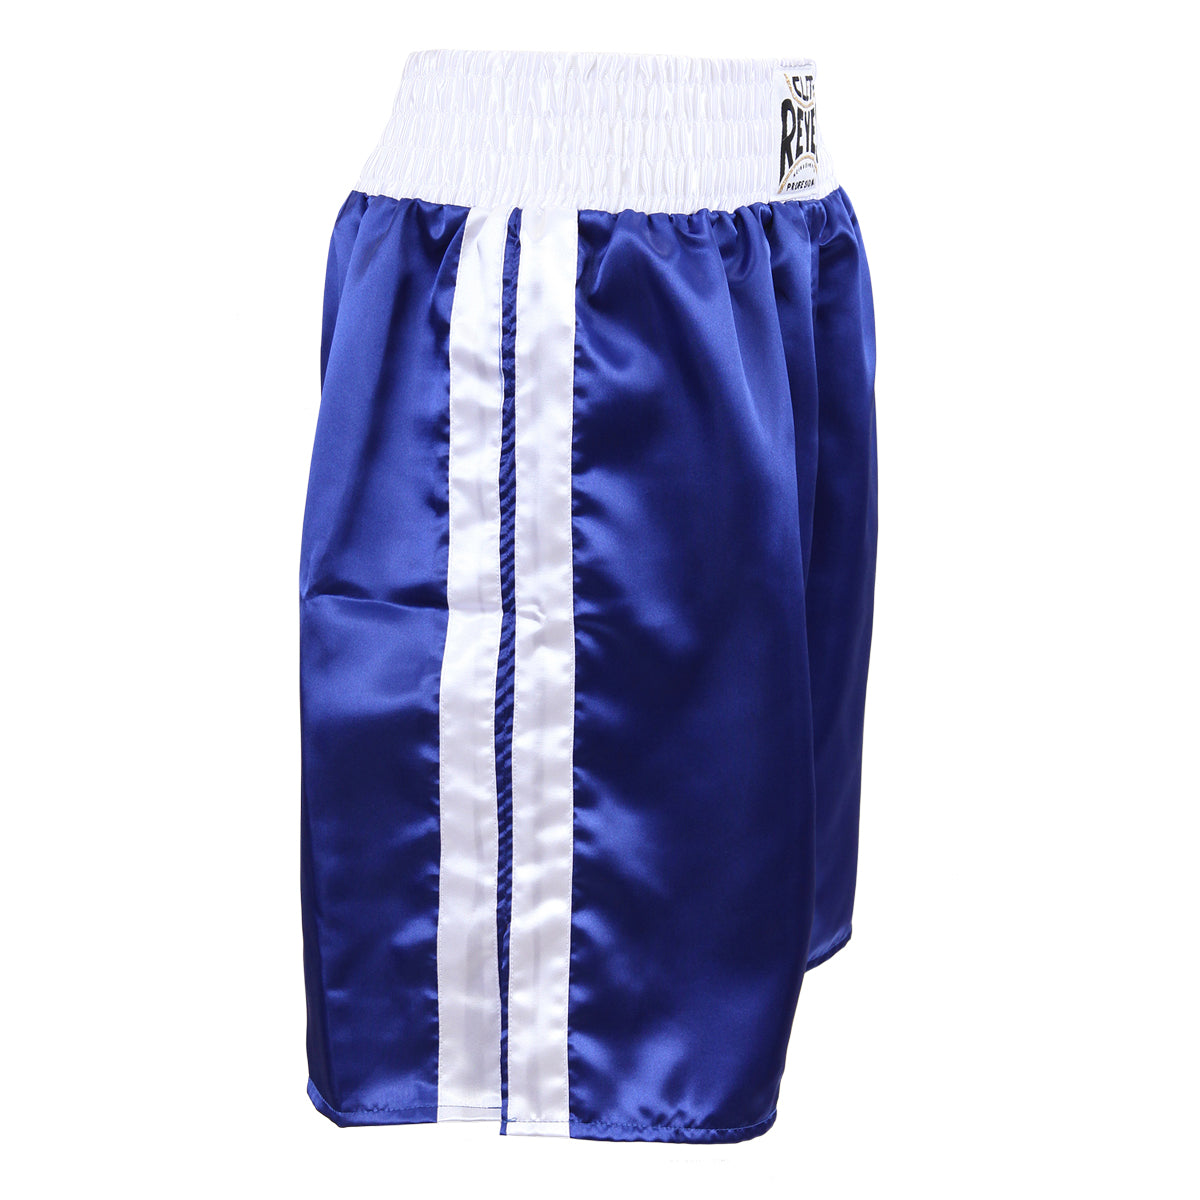 Cleto Reyes Satin Classic Boxing Trunks - XL (44") - Blue/White Cleto Reyes